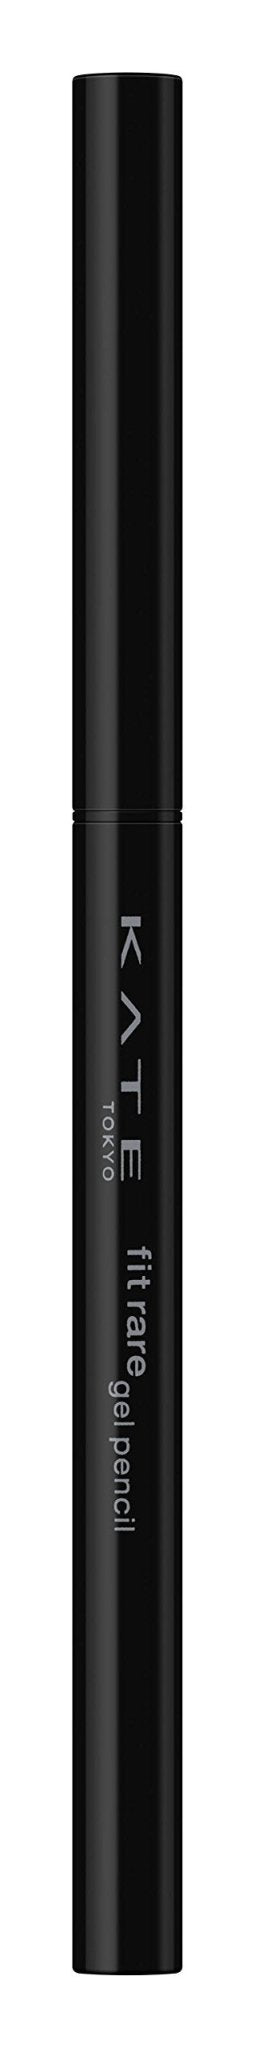 Kate High Black Rare Fit Gel Pencil BK - 1 0.08G - Discontinued Manufacturer Product